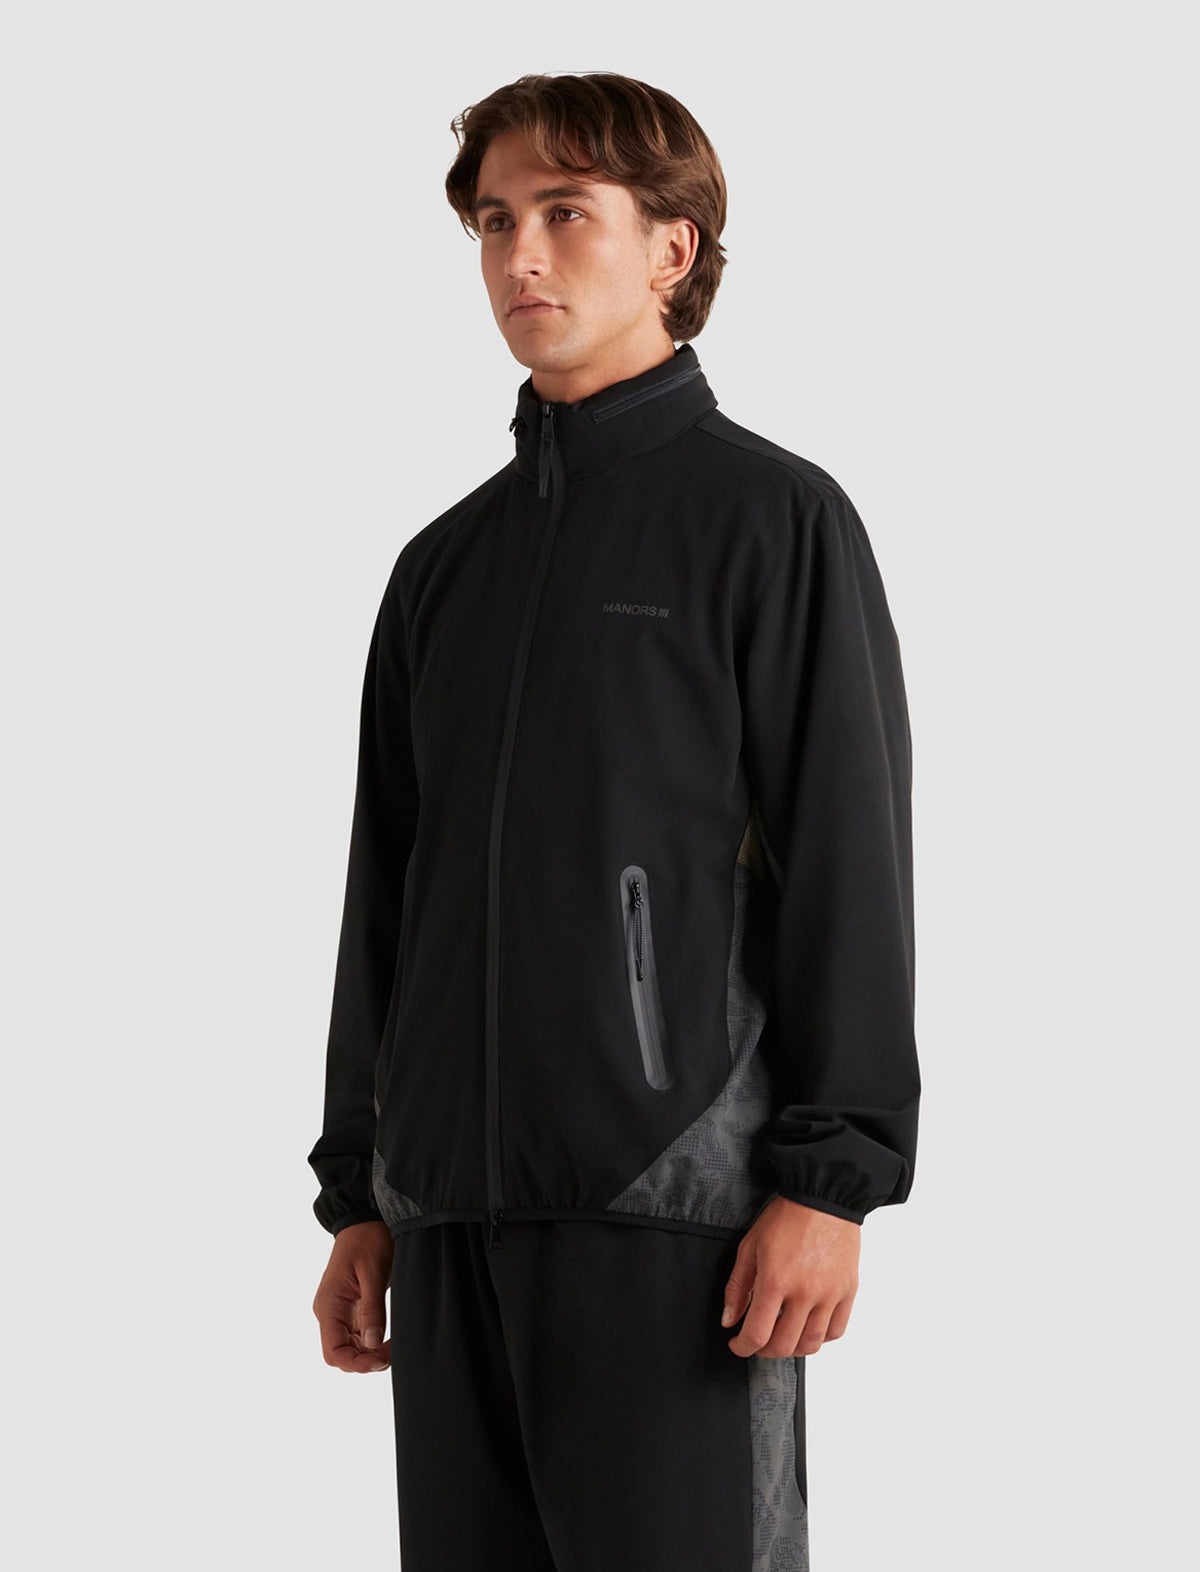 MANORS GOLF Ranger Tech Jacket in Black